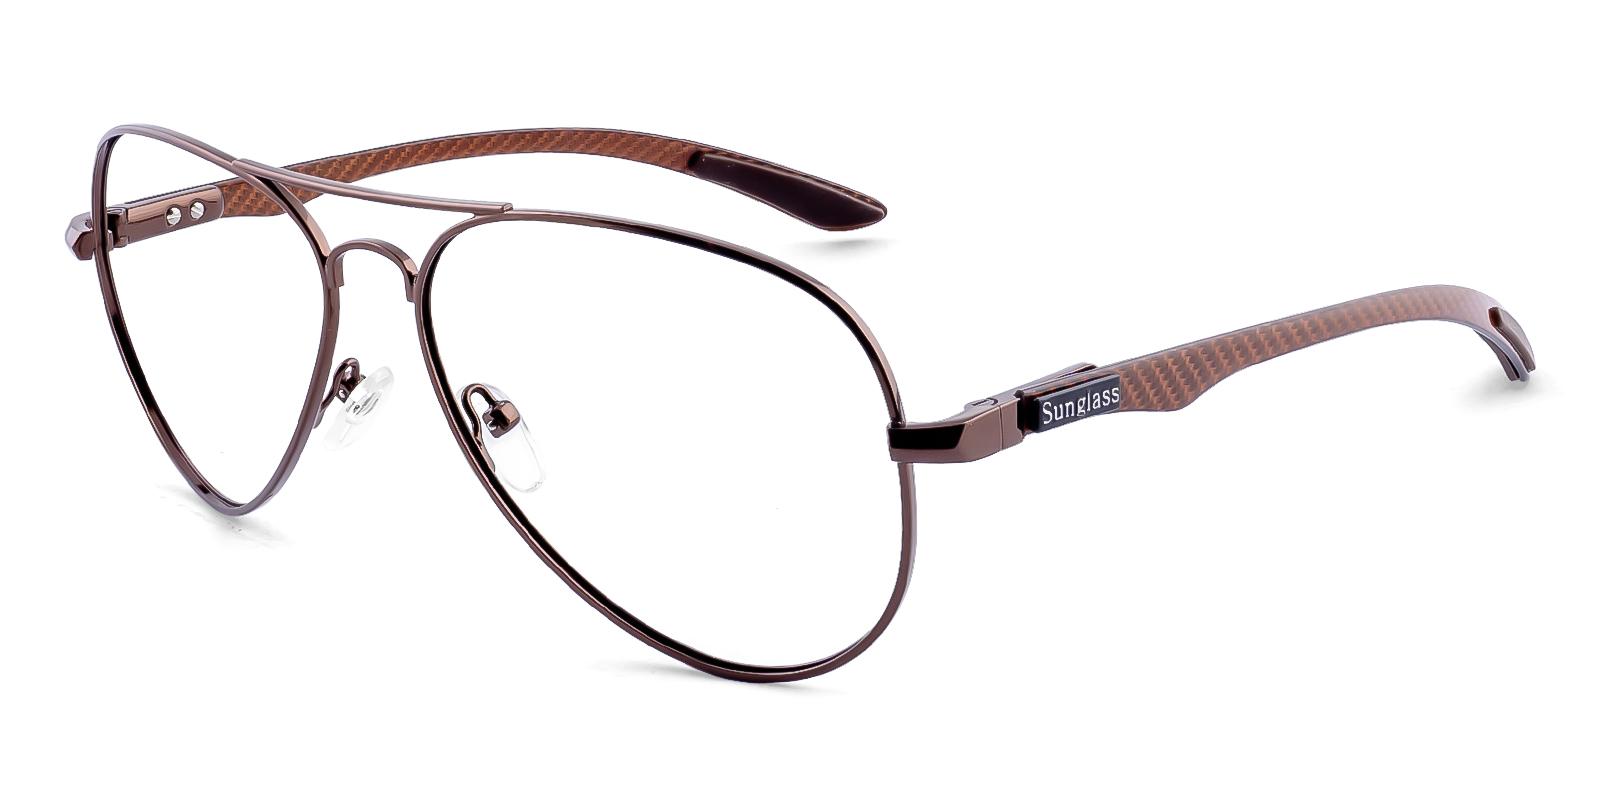 Phloeant Brown Metal Eyeglasses , NosePads Frames from ABBE Glasses